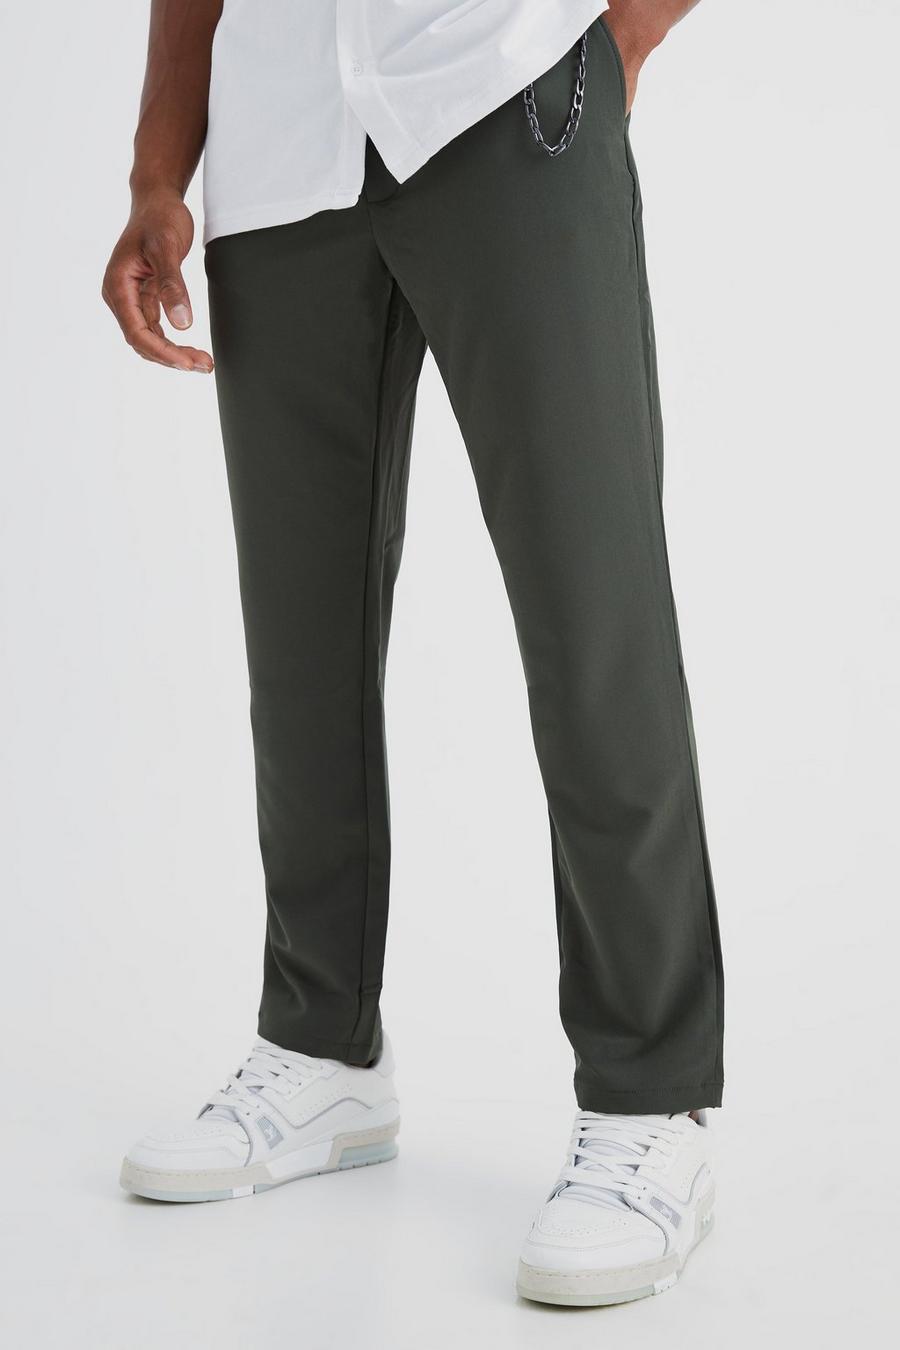 Khaki Elasticated Slim Crop 4 Way Stretch Chain Trousers